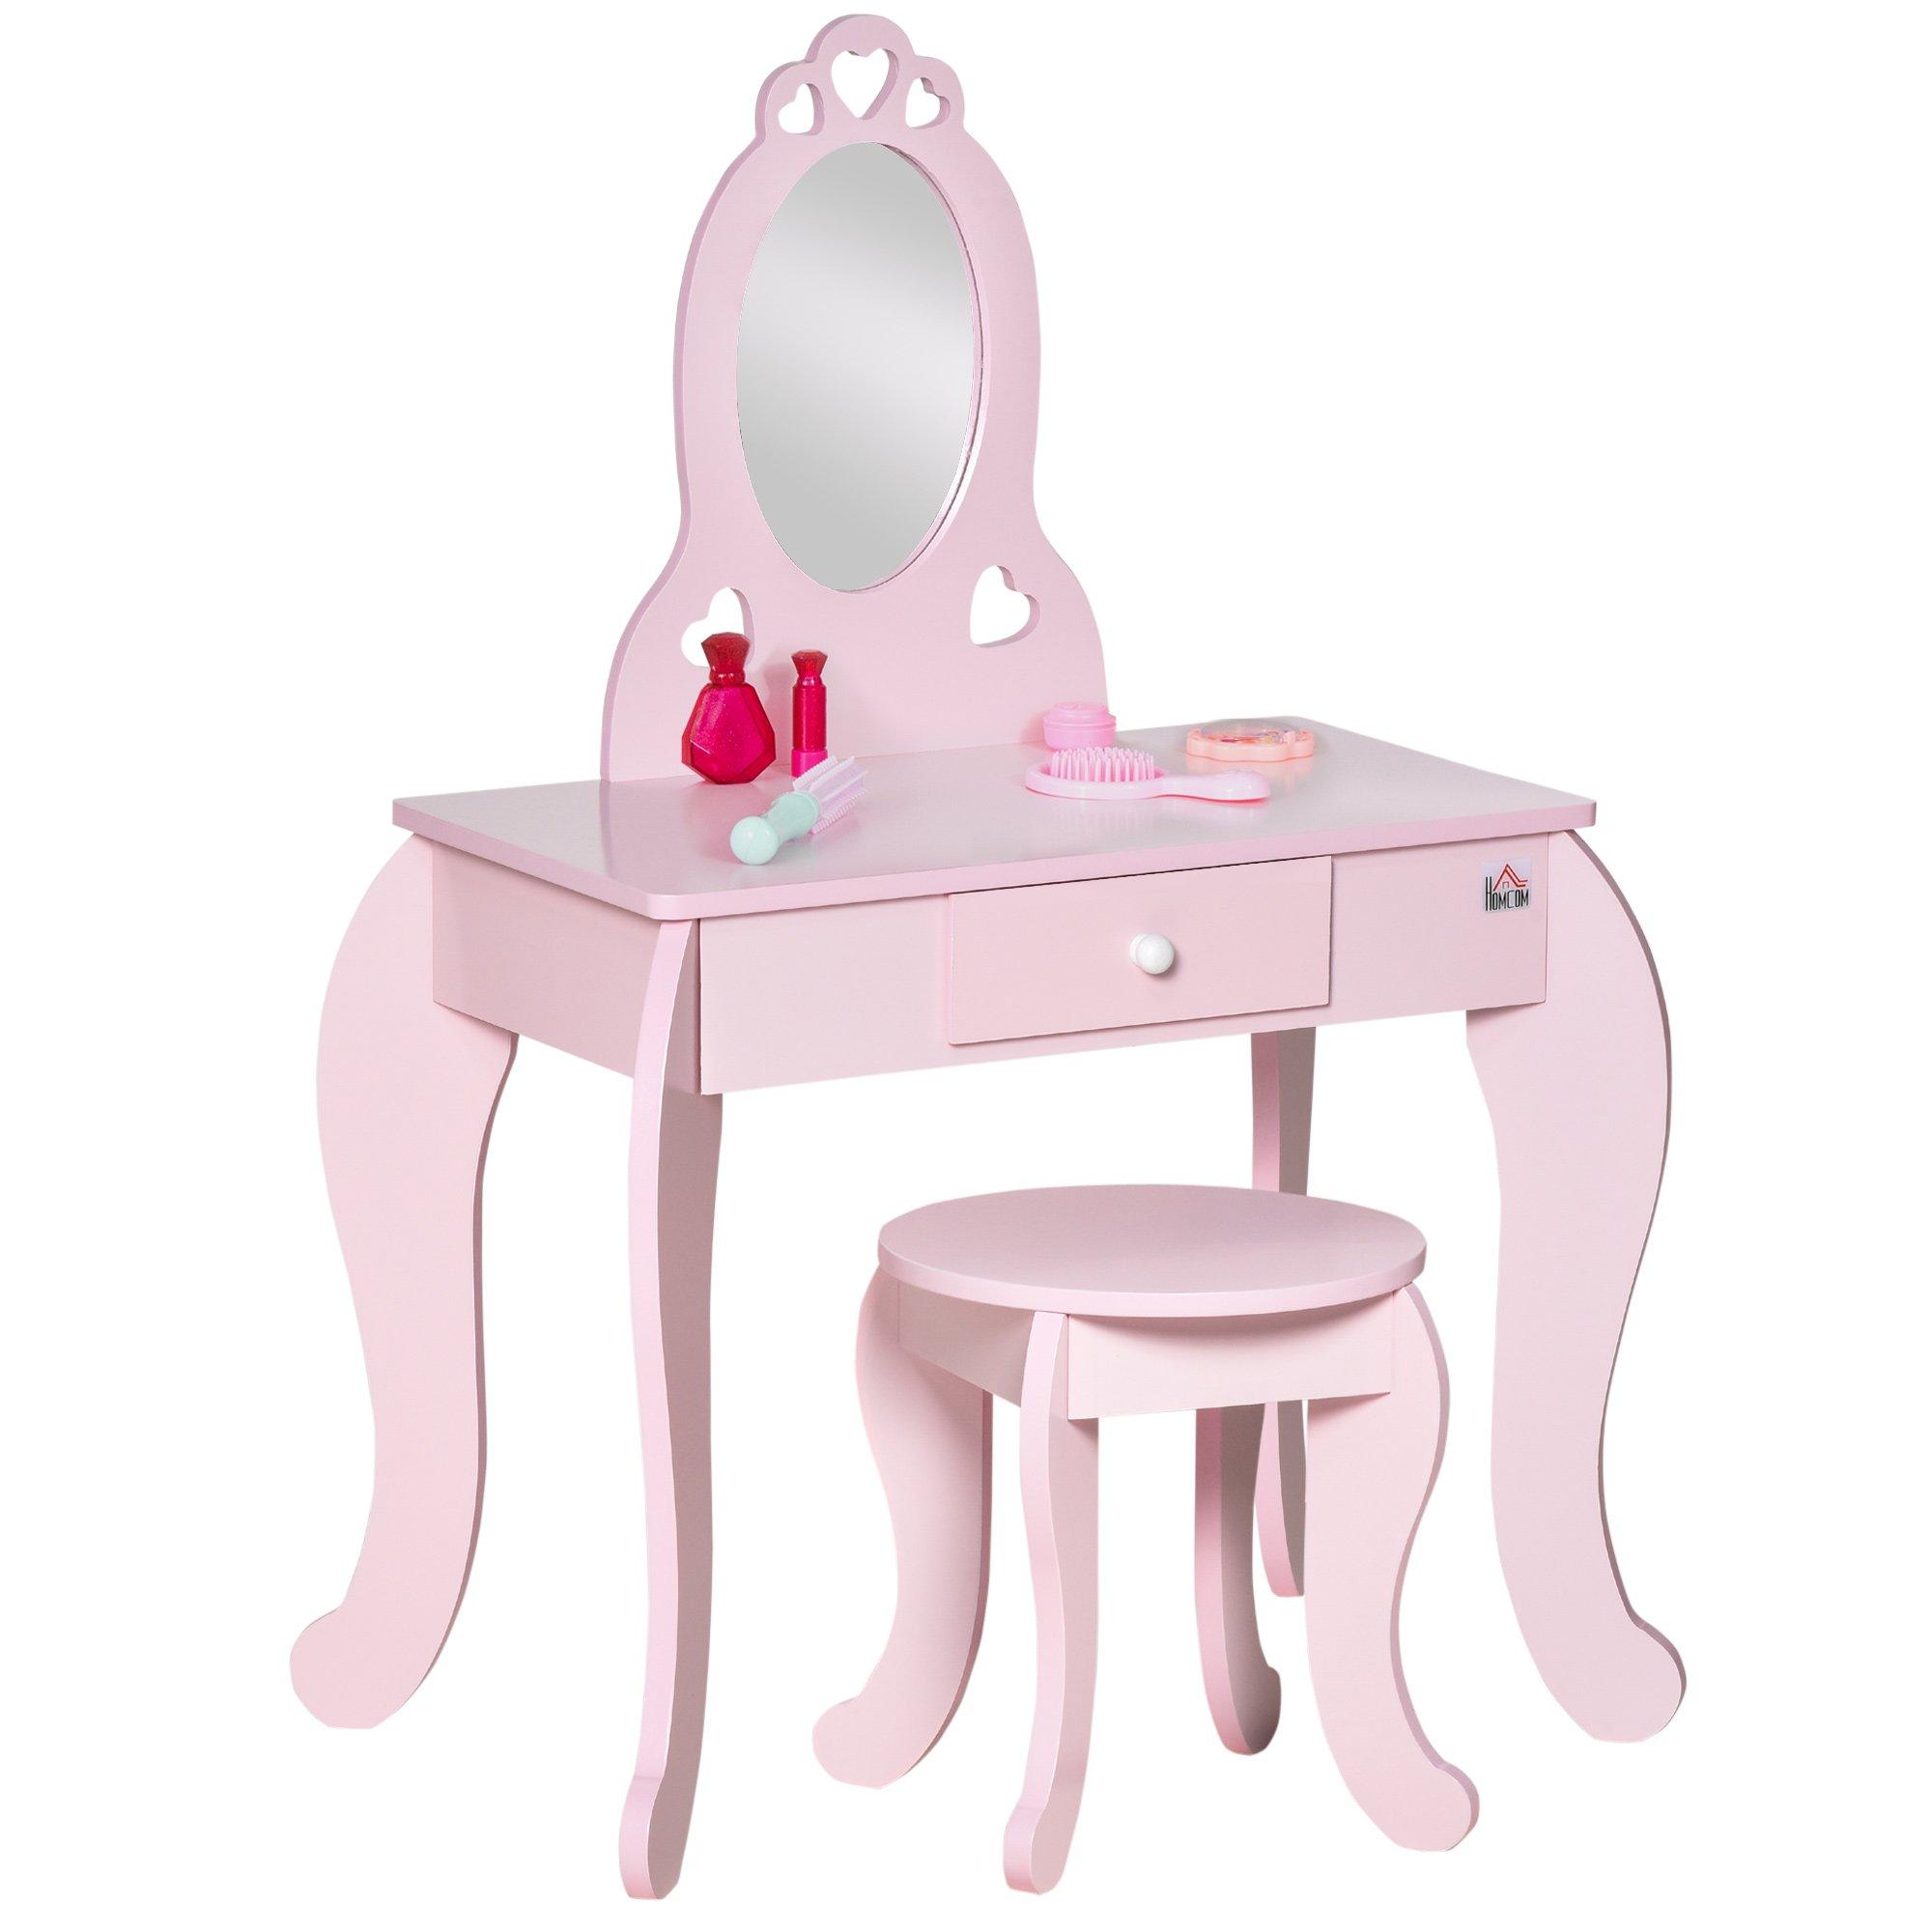 Kids Vanity Table & Stool Girls Dressing Set Make Up Desk with Mirror Pink